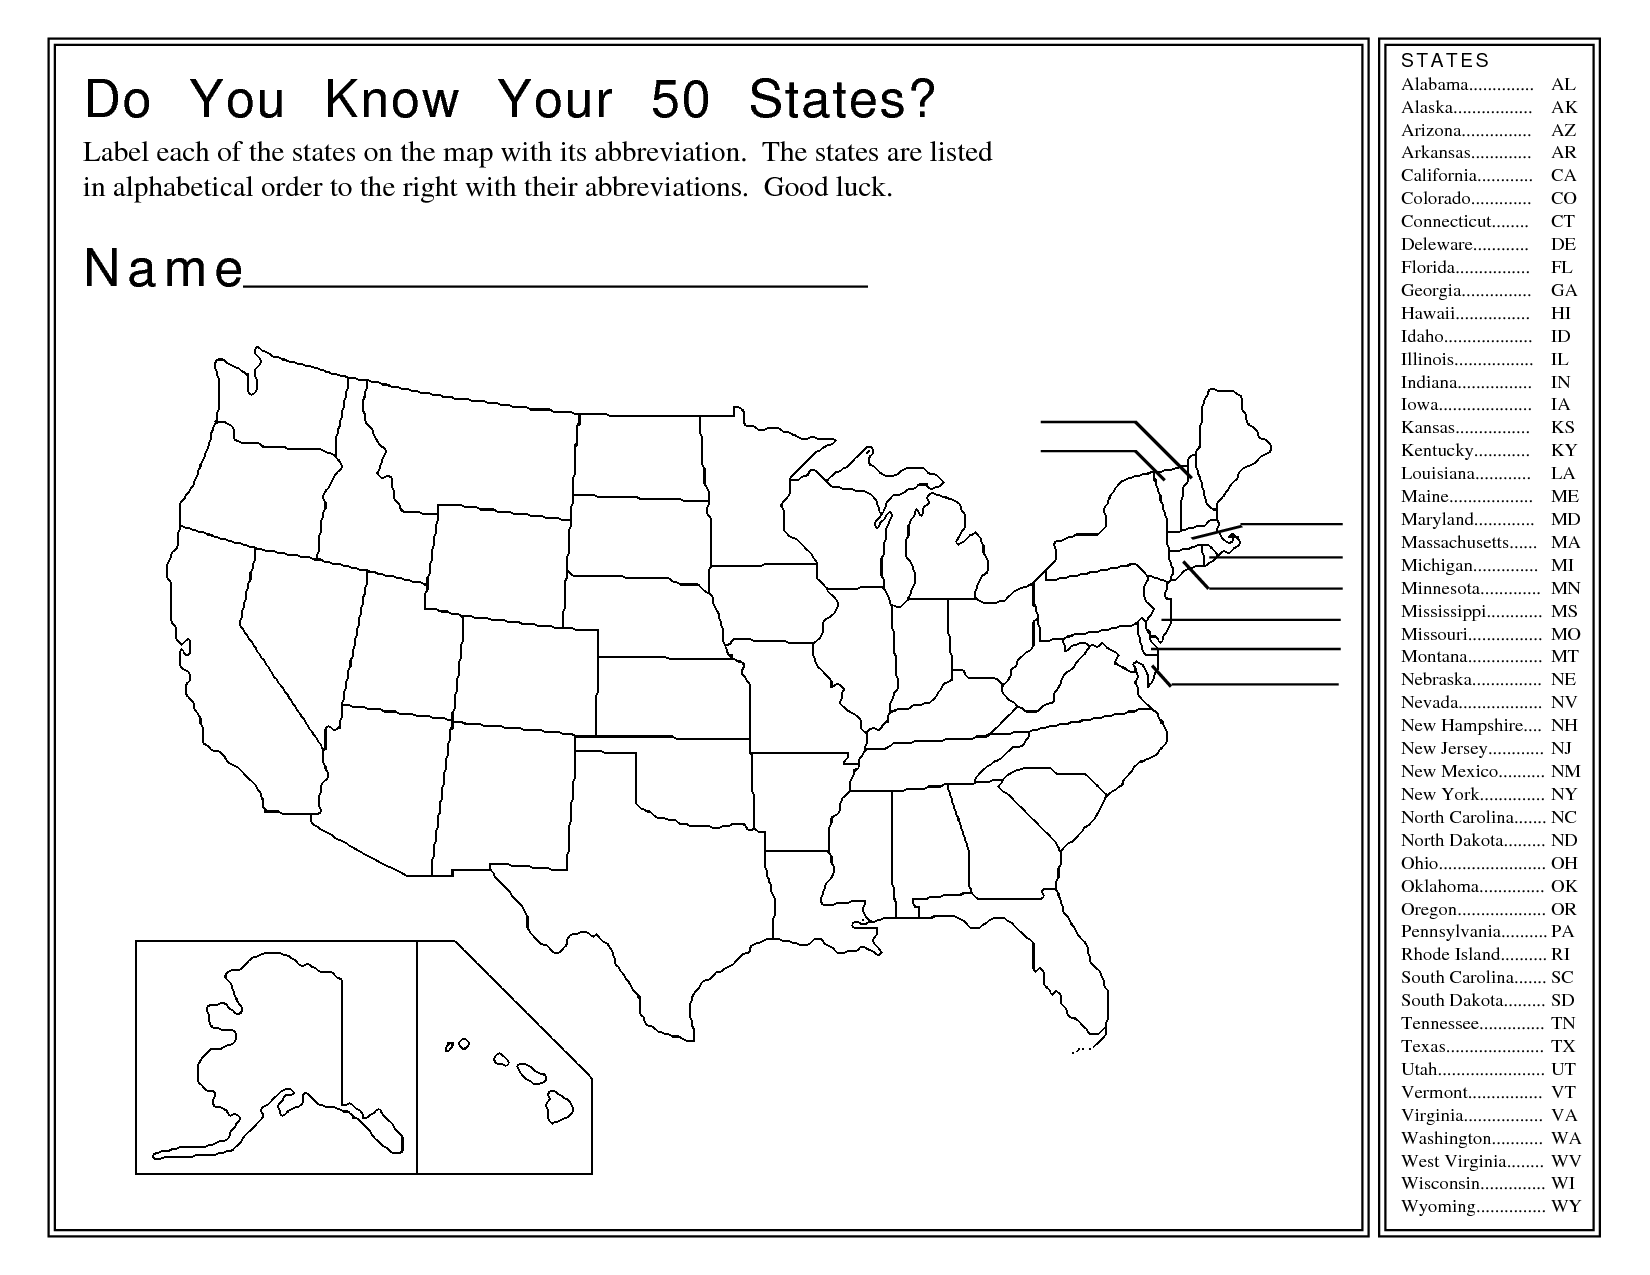 United States Geography Worksheets Image